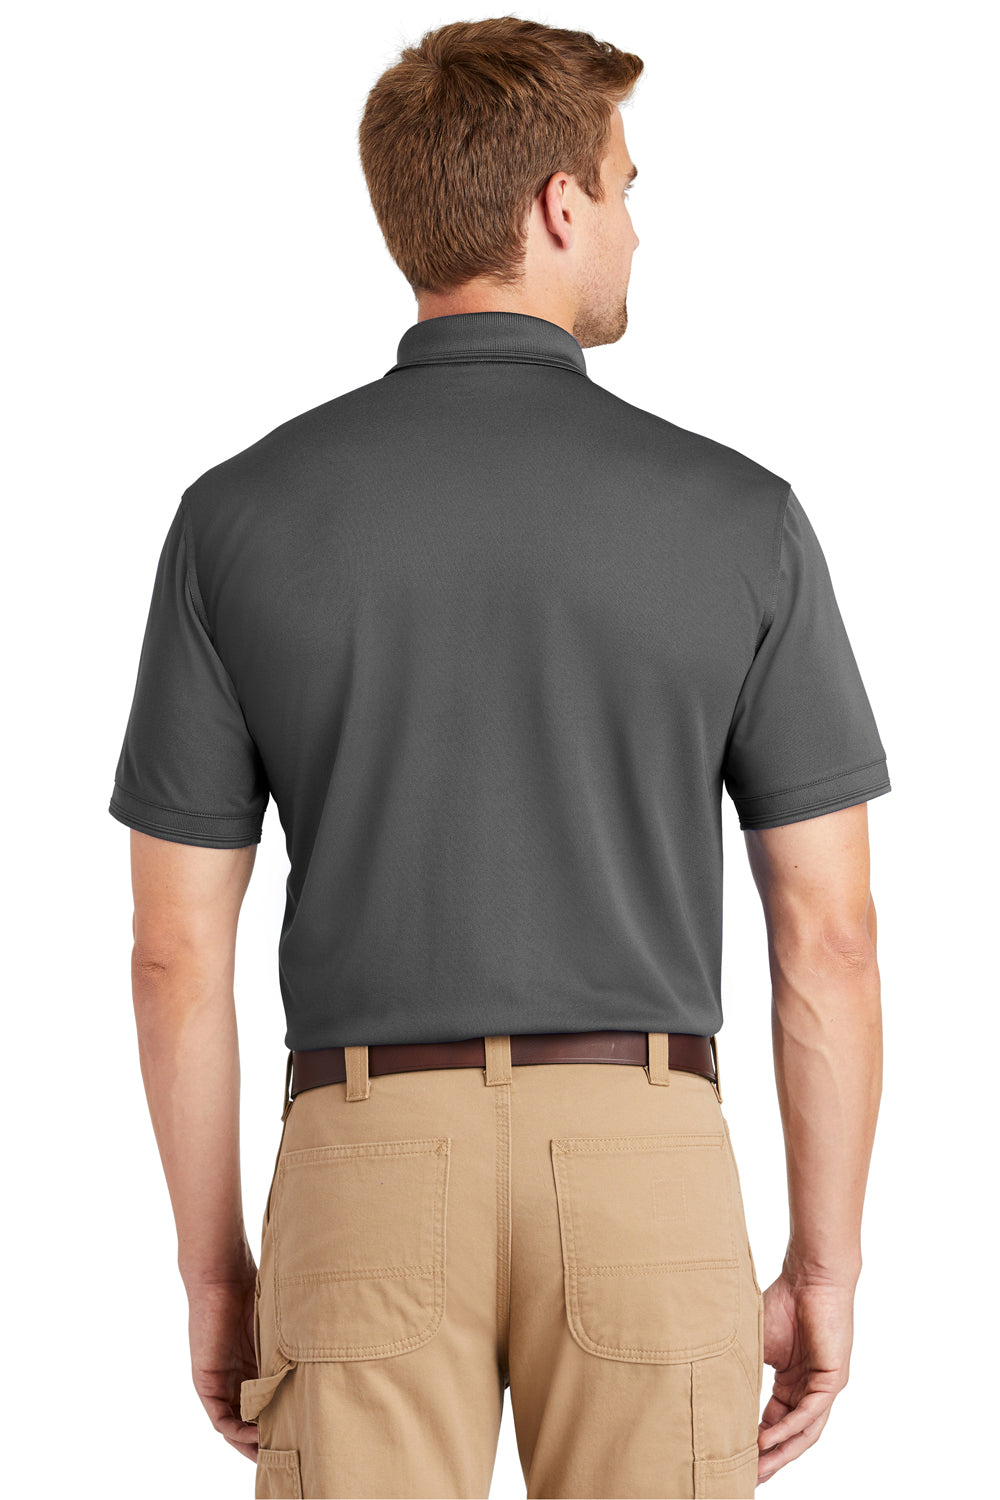 CornerStone CS4020 Mens Industrial Moisture Wicking Short Sleeve Polo Shirt Charcoal Grey Back